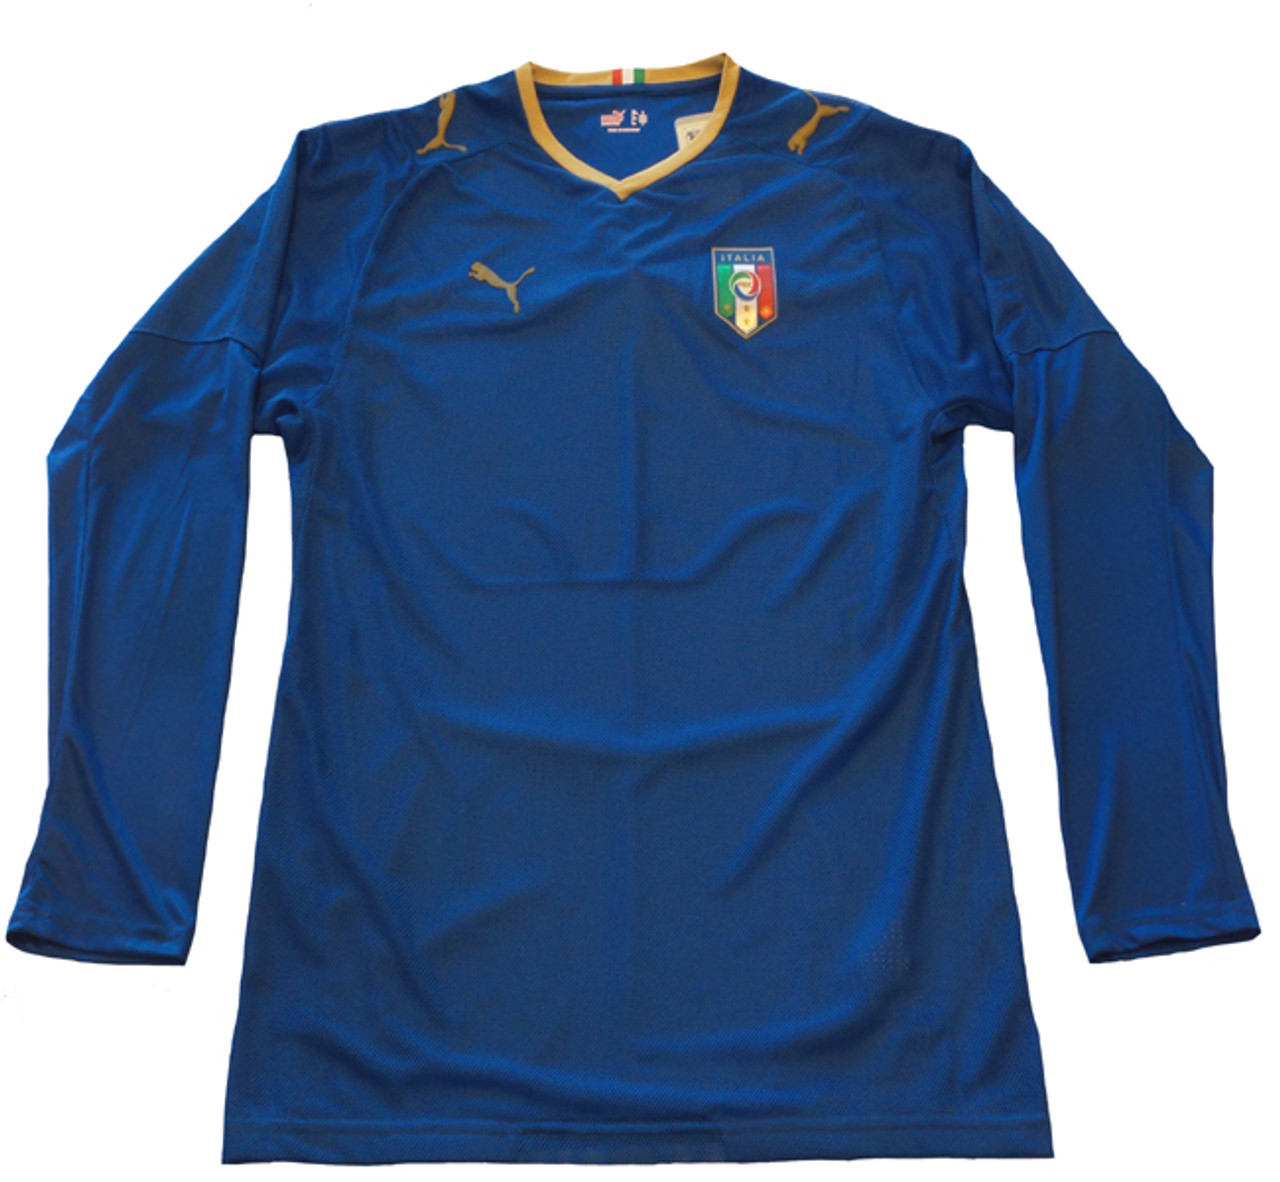 Kit Of The Day - Puma Italy 2007/08 - The Football House